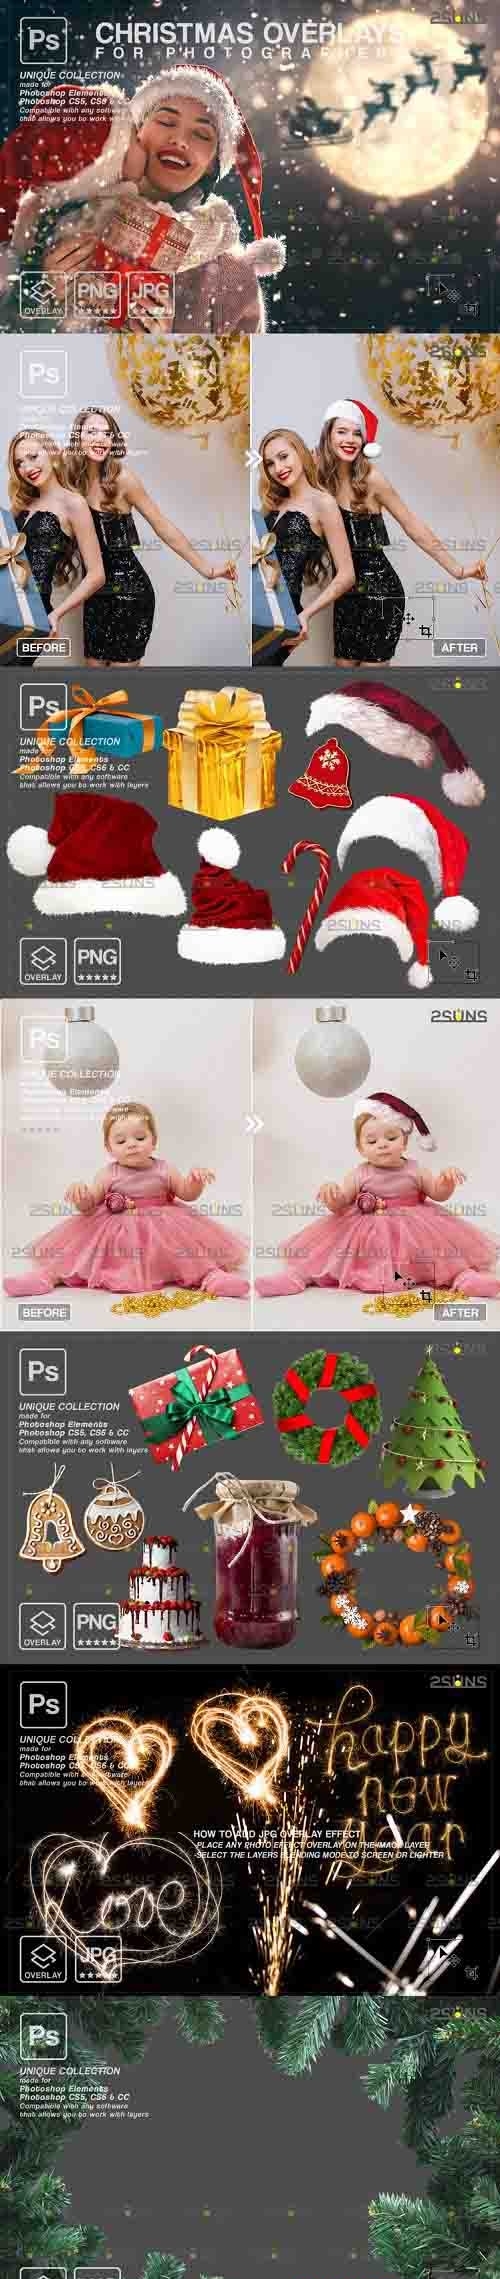 Christmas overlay & Sparkler overlay, Photoshop overlay - 1133249